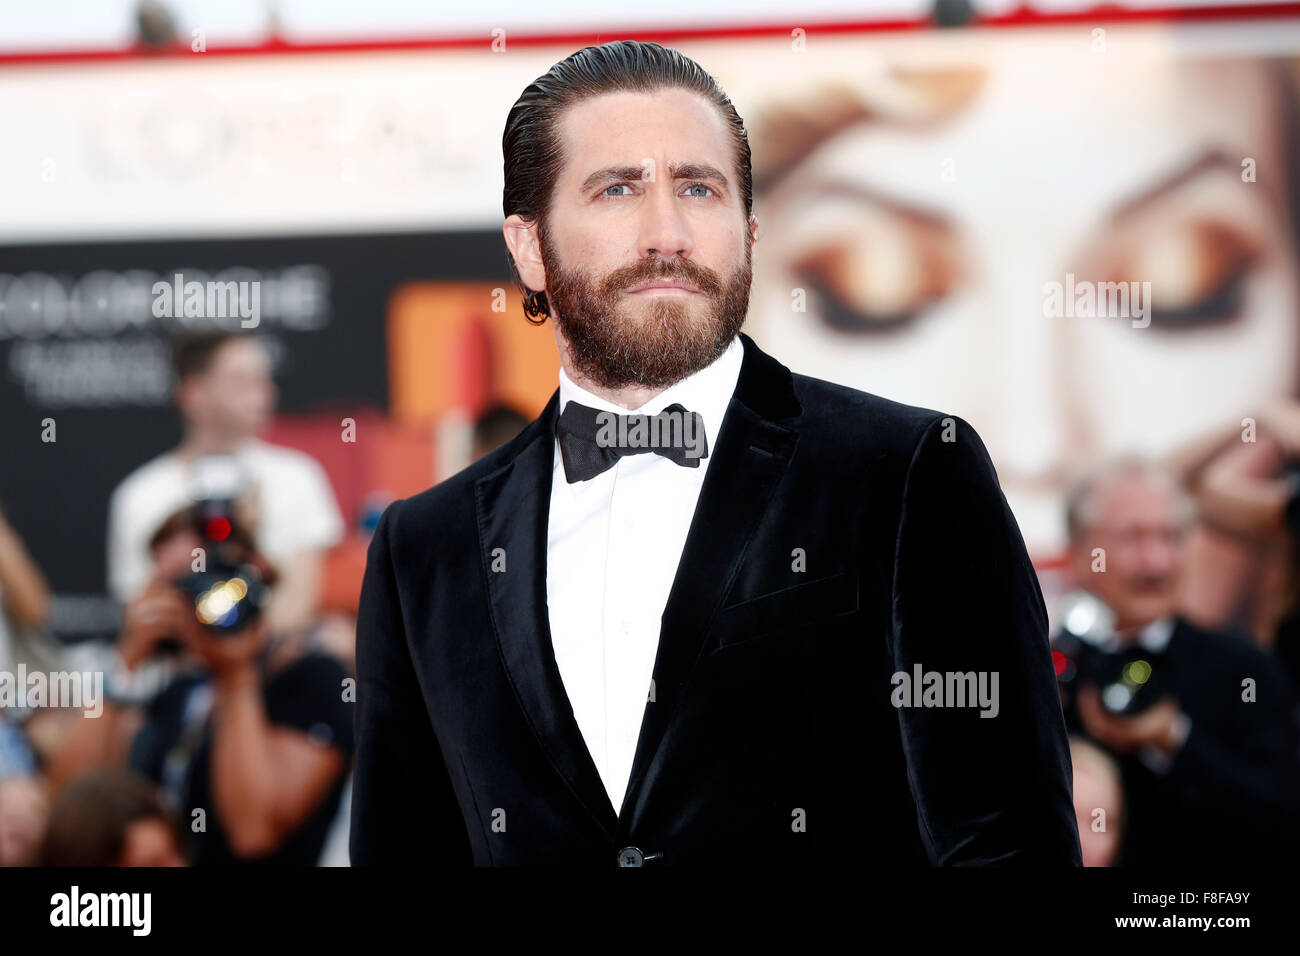 Venedig, Italien - 2. SEPTEMBER: Jake Gyllenhaal besucht die Premiere von "Everest" während des 72. Venedig Film Festival im September Stockfoto